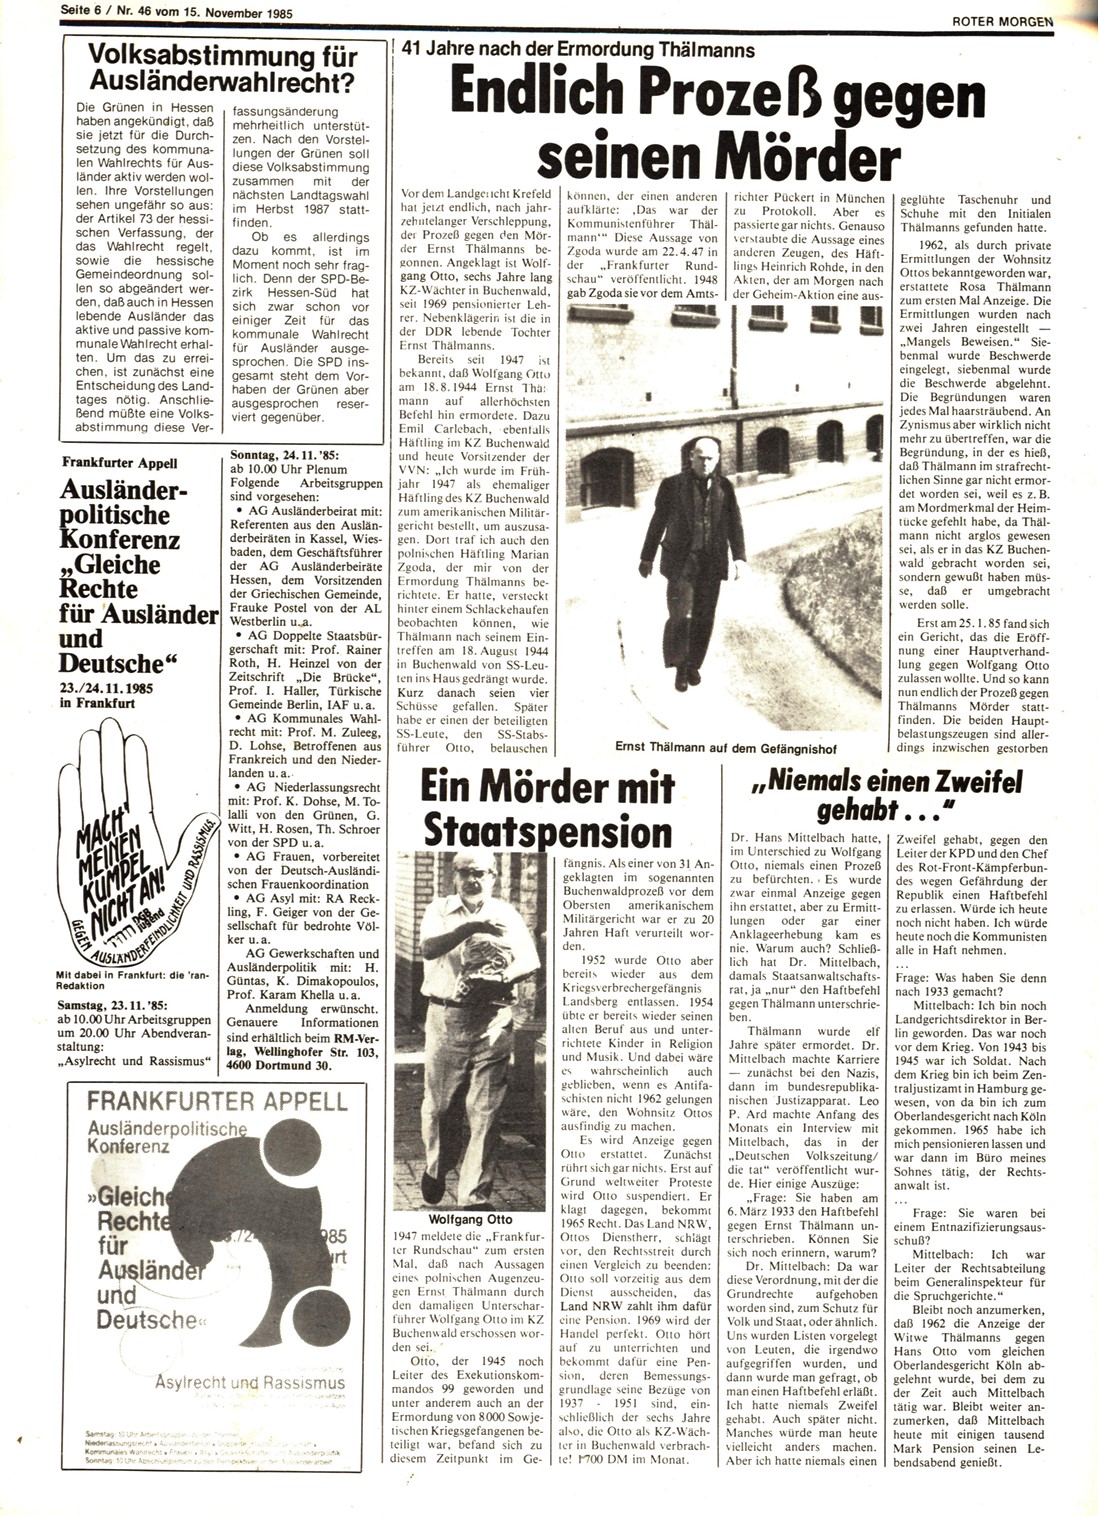 Roter Morgen, 19. Jg., 15. November 1985, Nr. 46, Seite 6